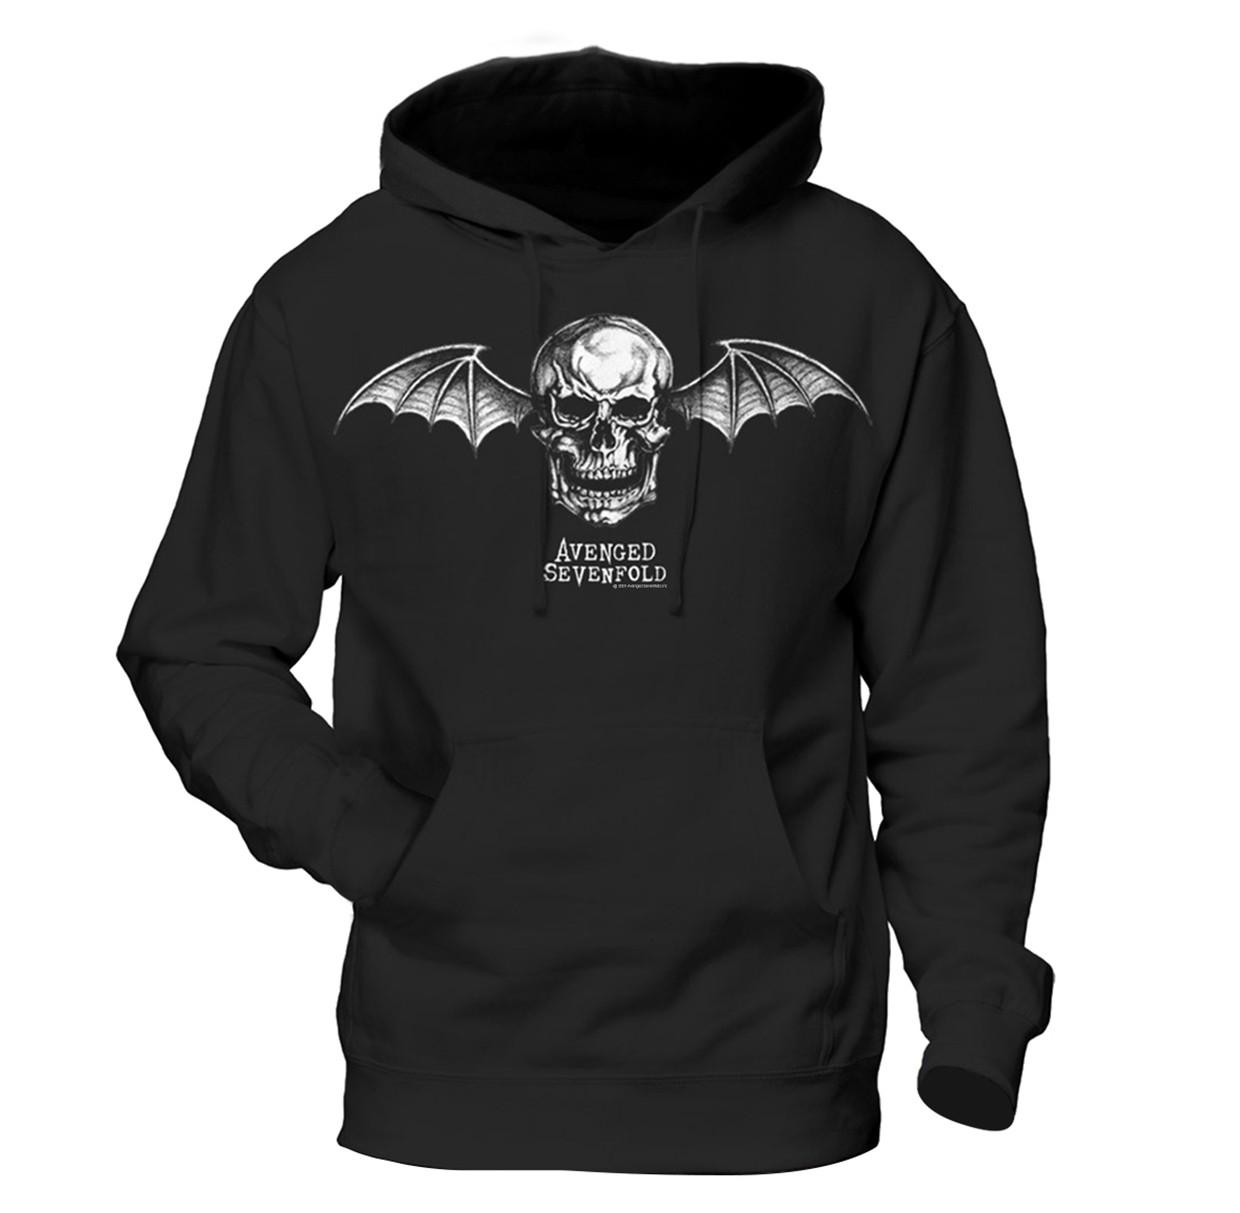 New Bat Logo - Details about Avenged Sevenfold - Death Bat Logo (NEW MENS HOODED  SWEATSHIRT )